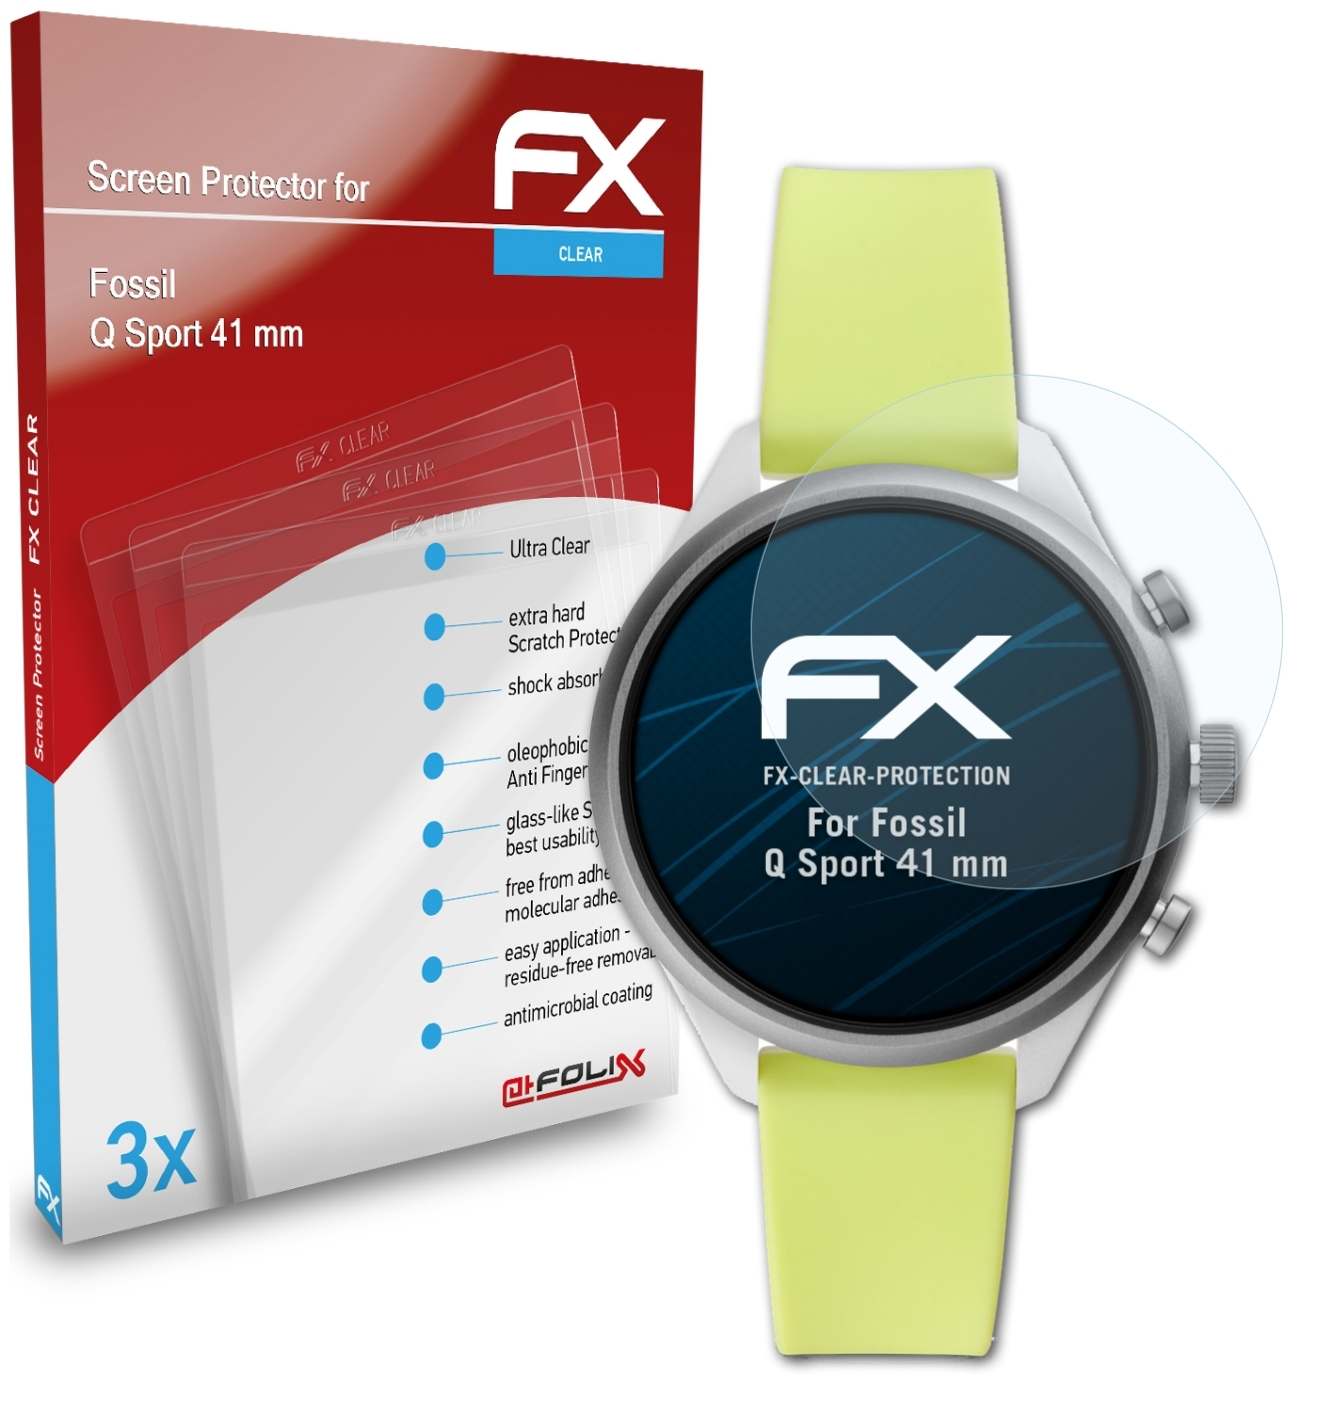 (41 Sport ATFOLIX Fossil Q 3x mm)) Displayschutz(für FX-Clear